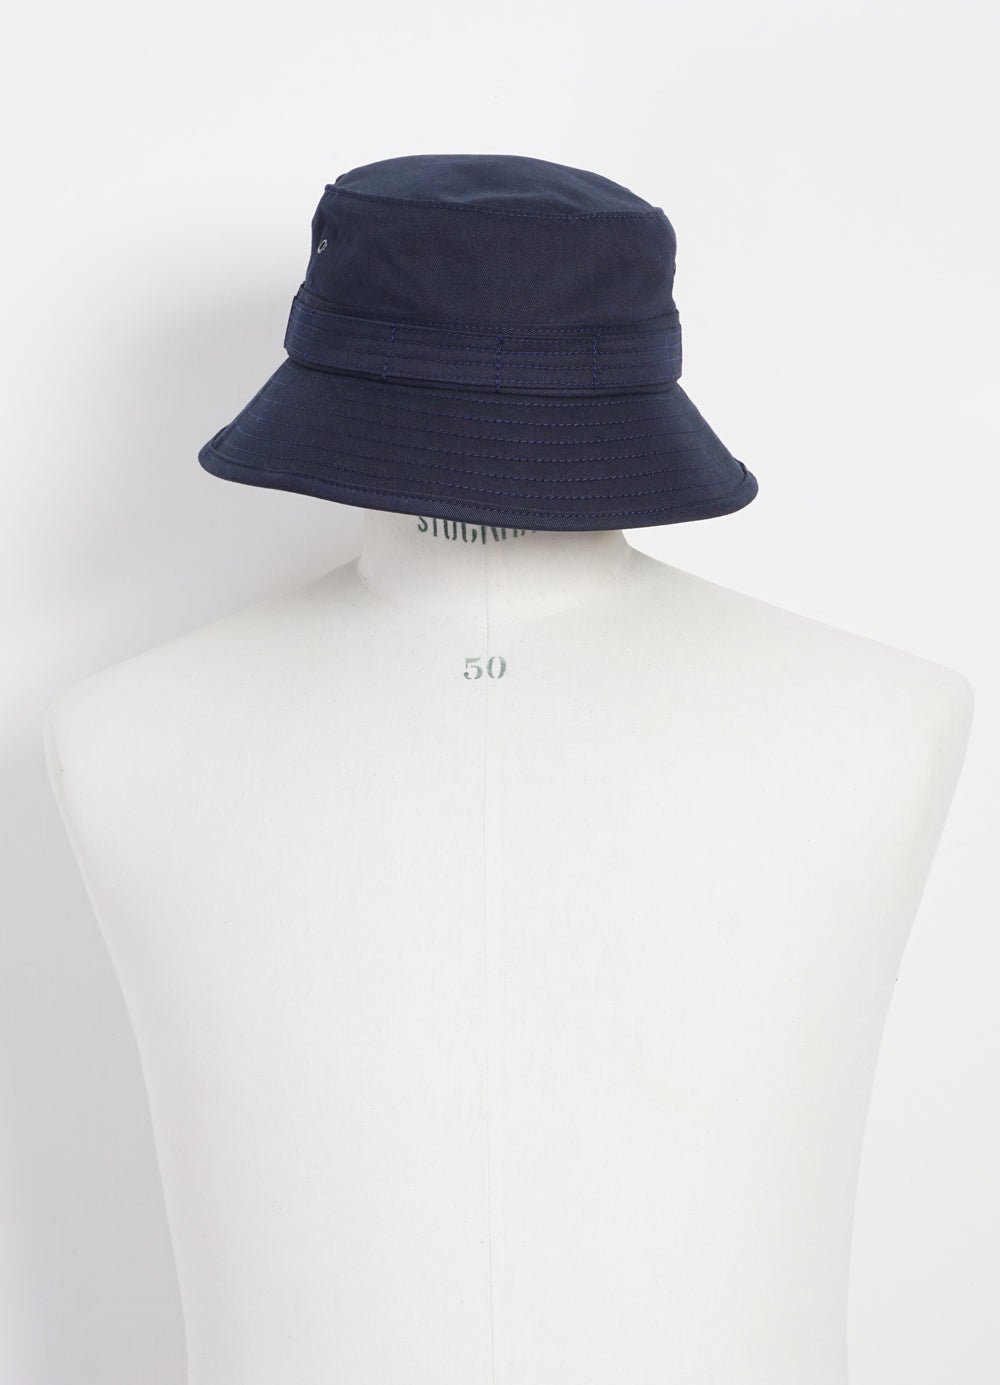 HANSEN GARMENTS - EDVARD | Bucket Hat | Navy - HANSEN Garments